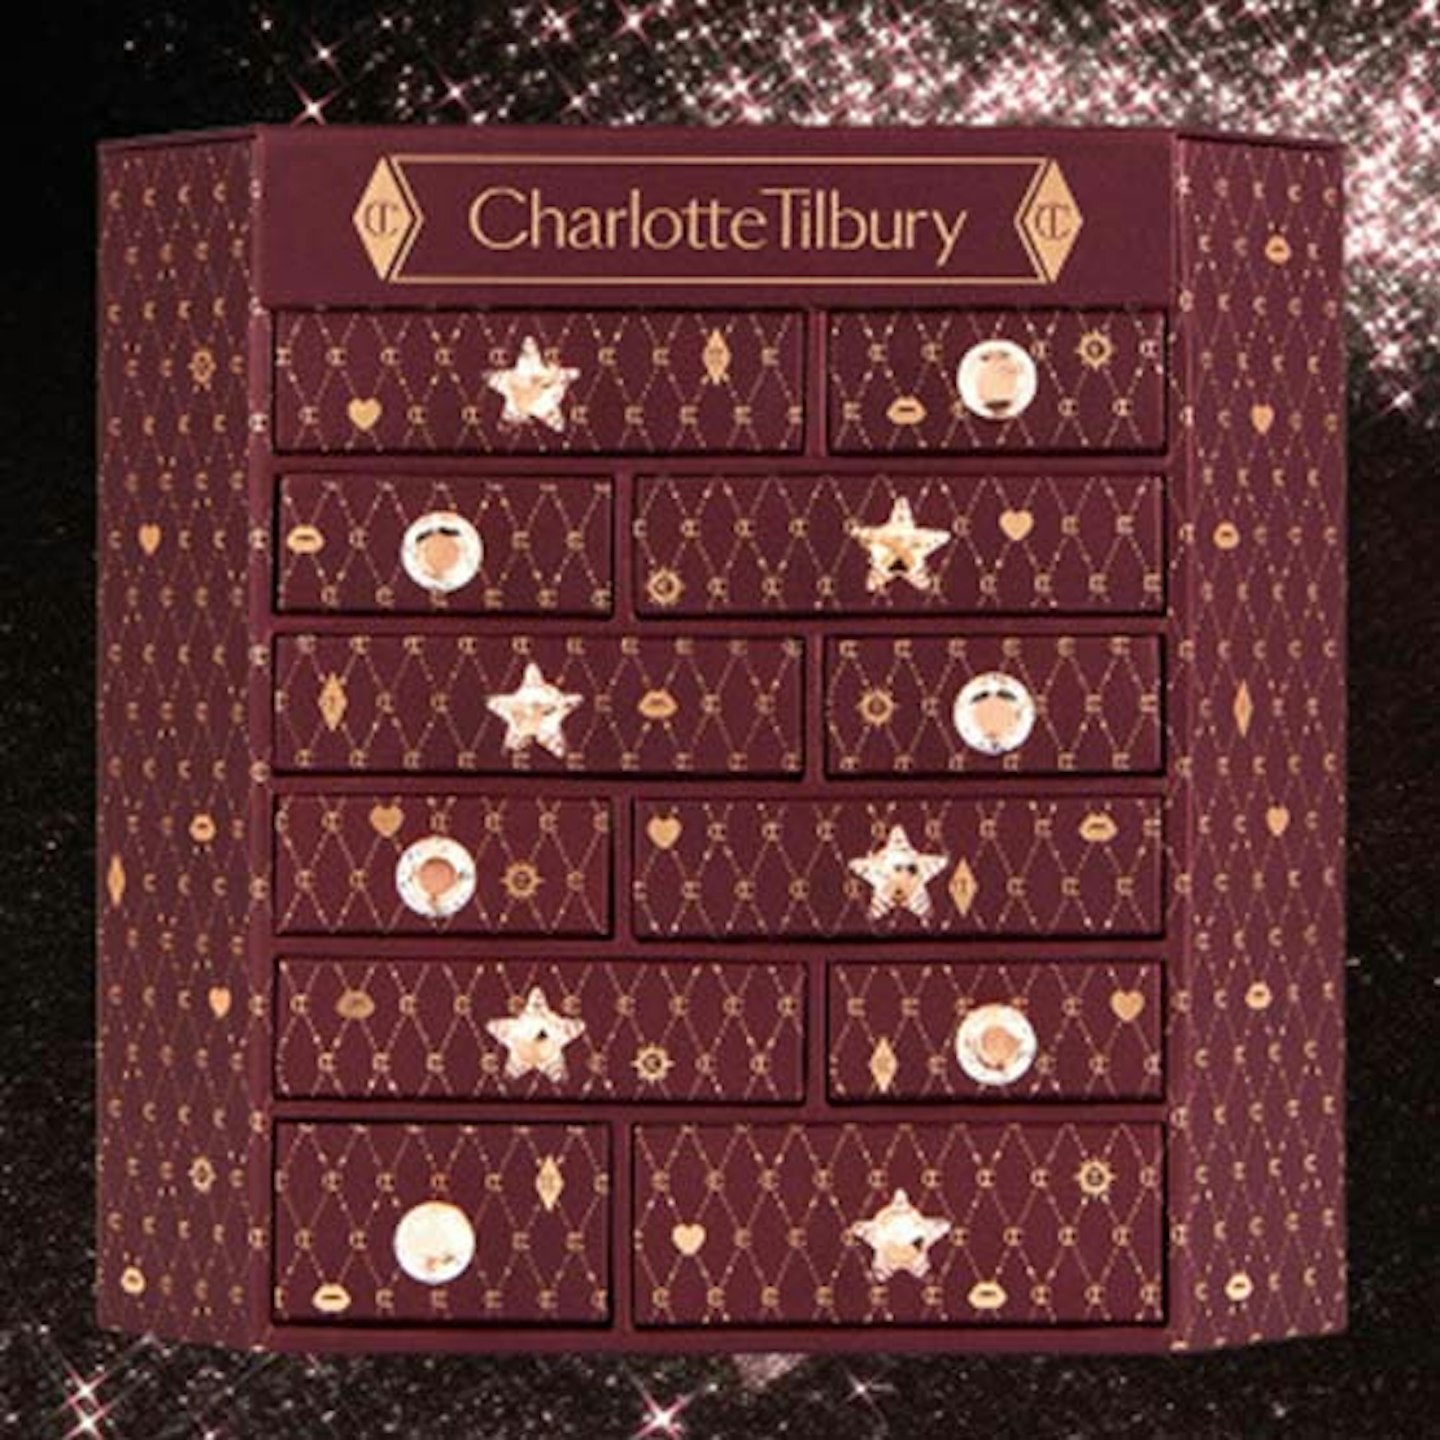 Charlotte Tilbury beauty Advent calendars